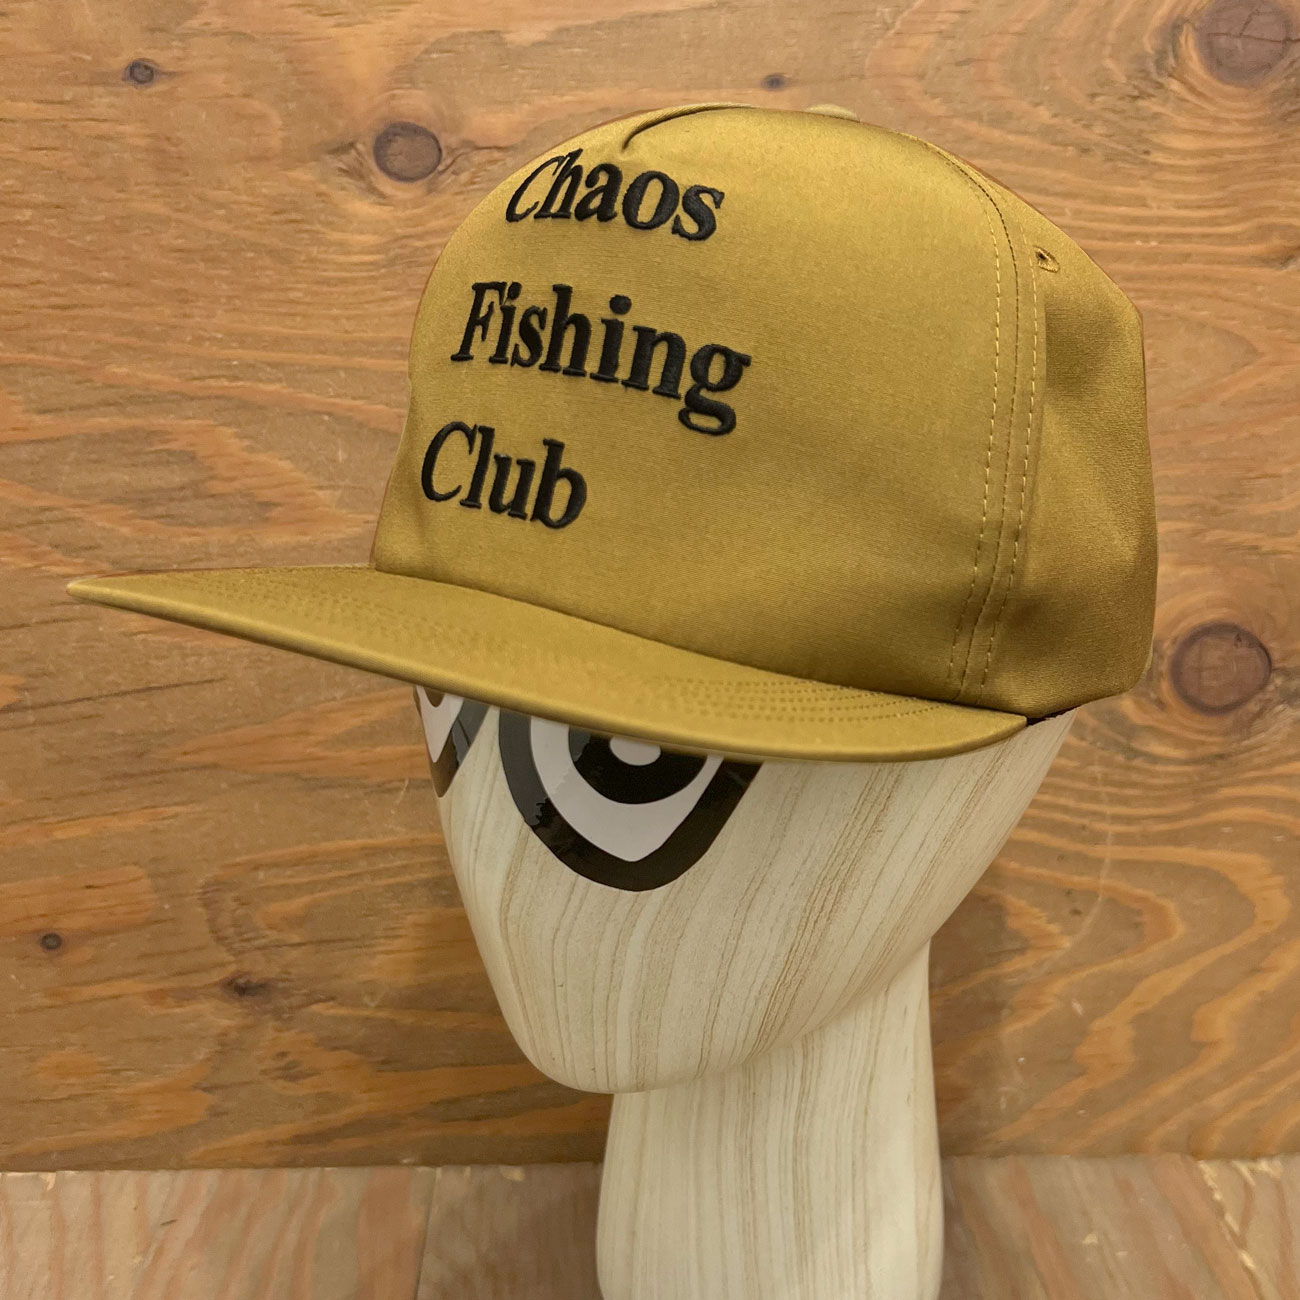 CHAOS FISHING CLUB LOGO CAP